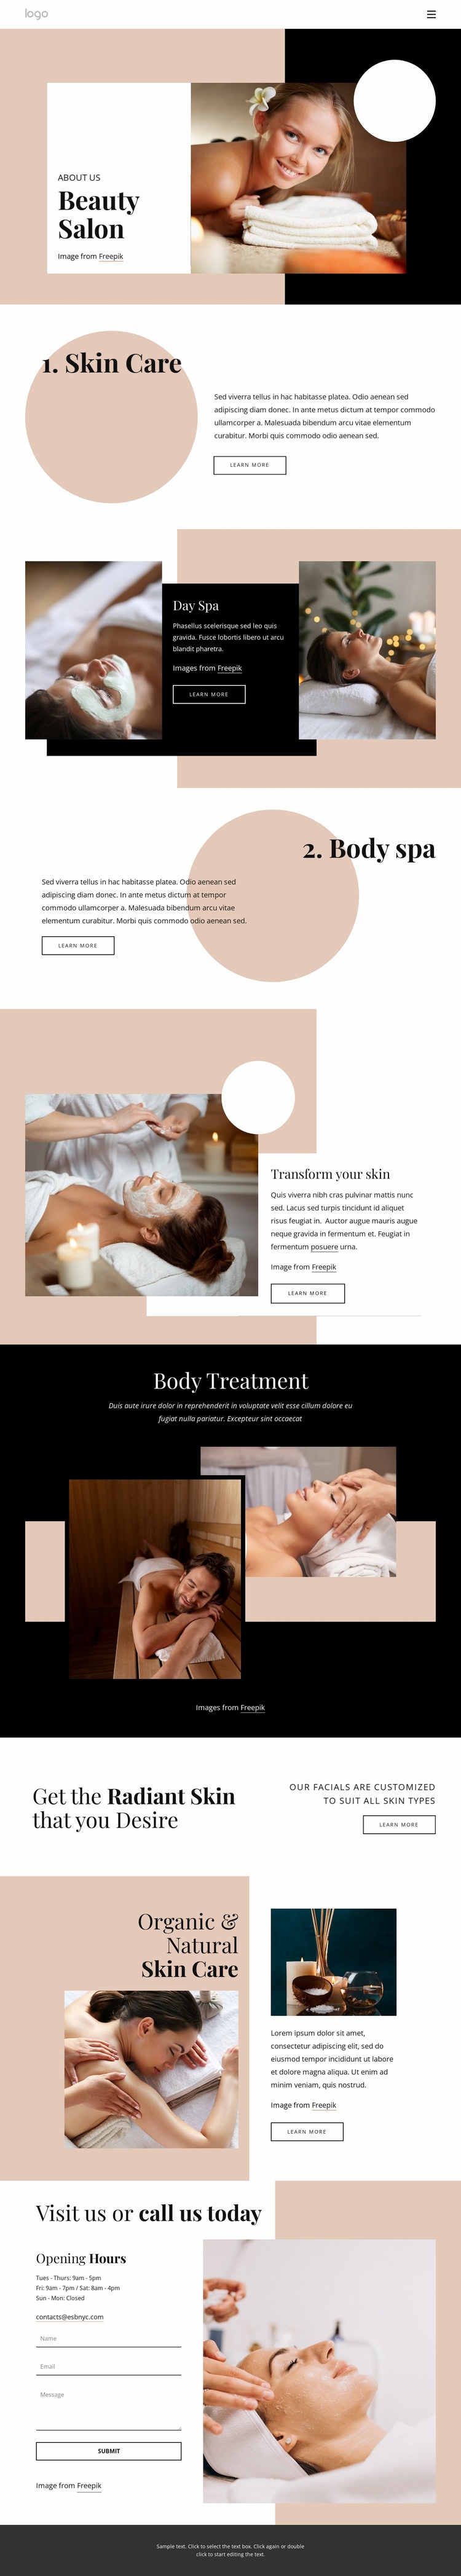 New wellness experiences Ecommerce Website Design